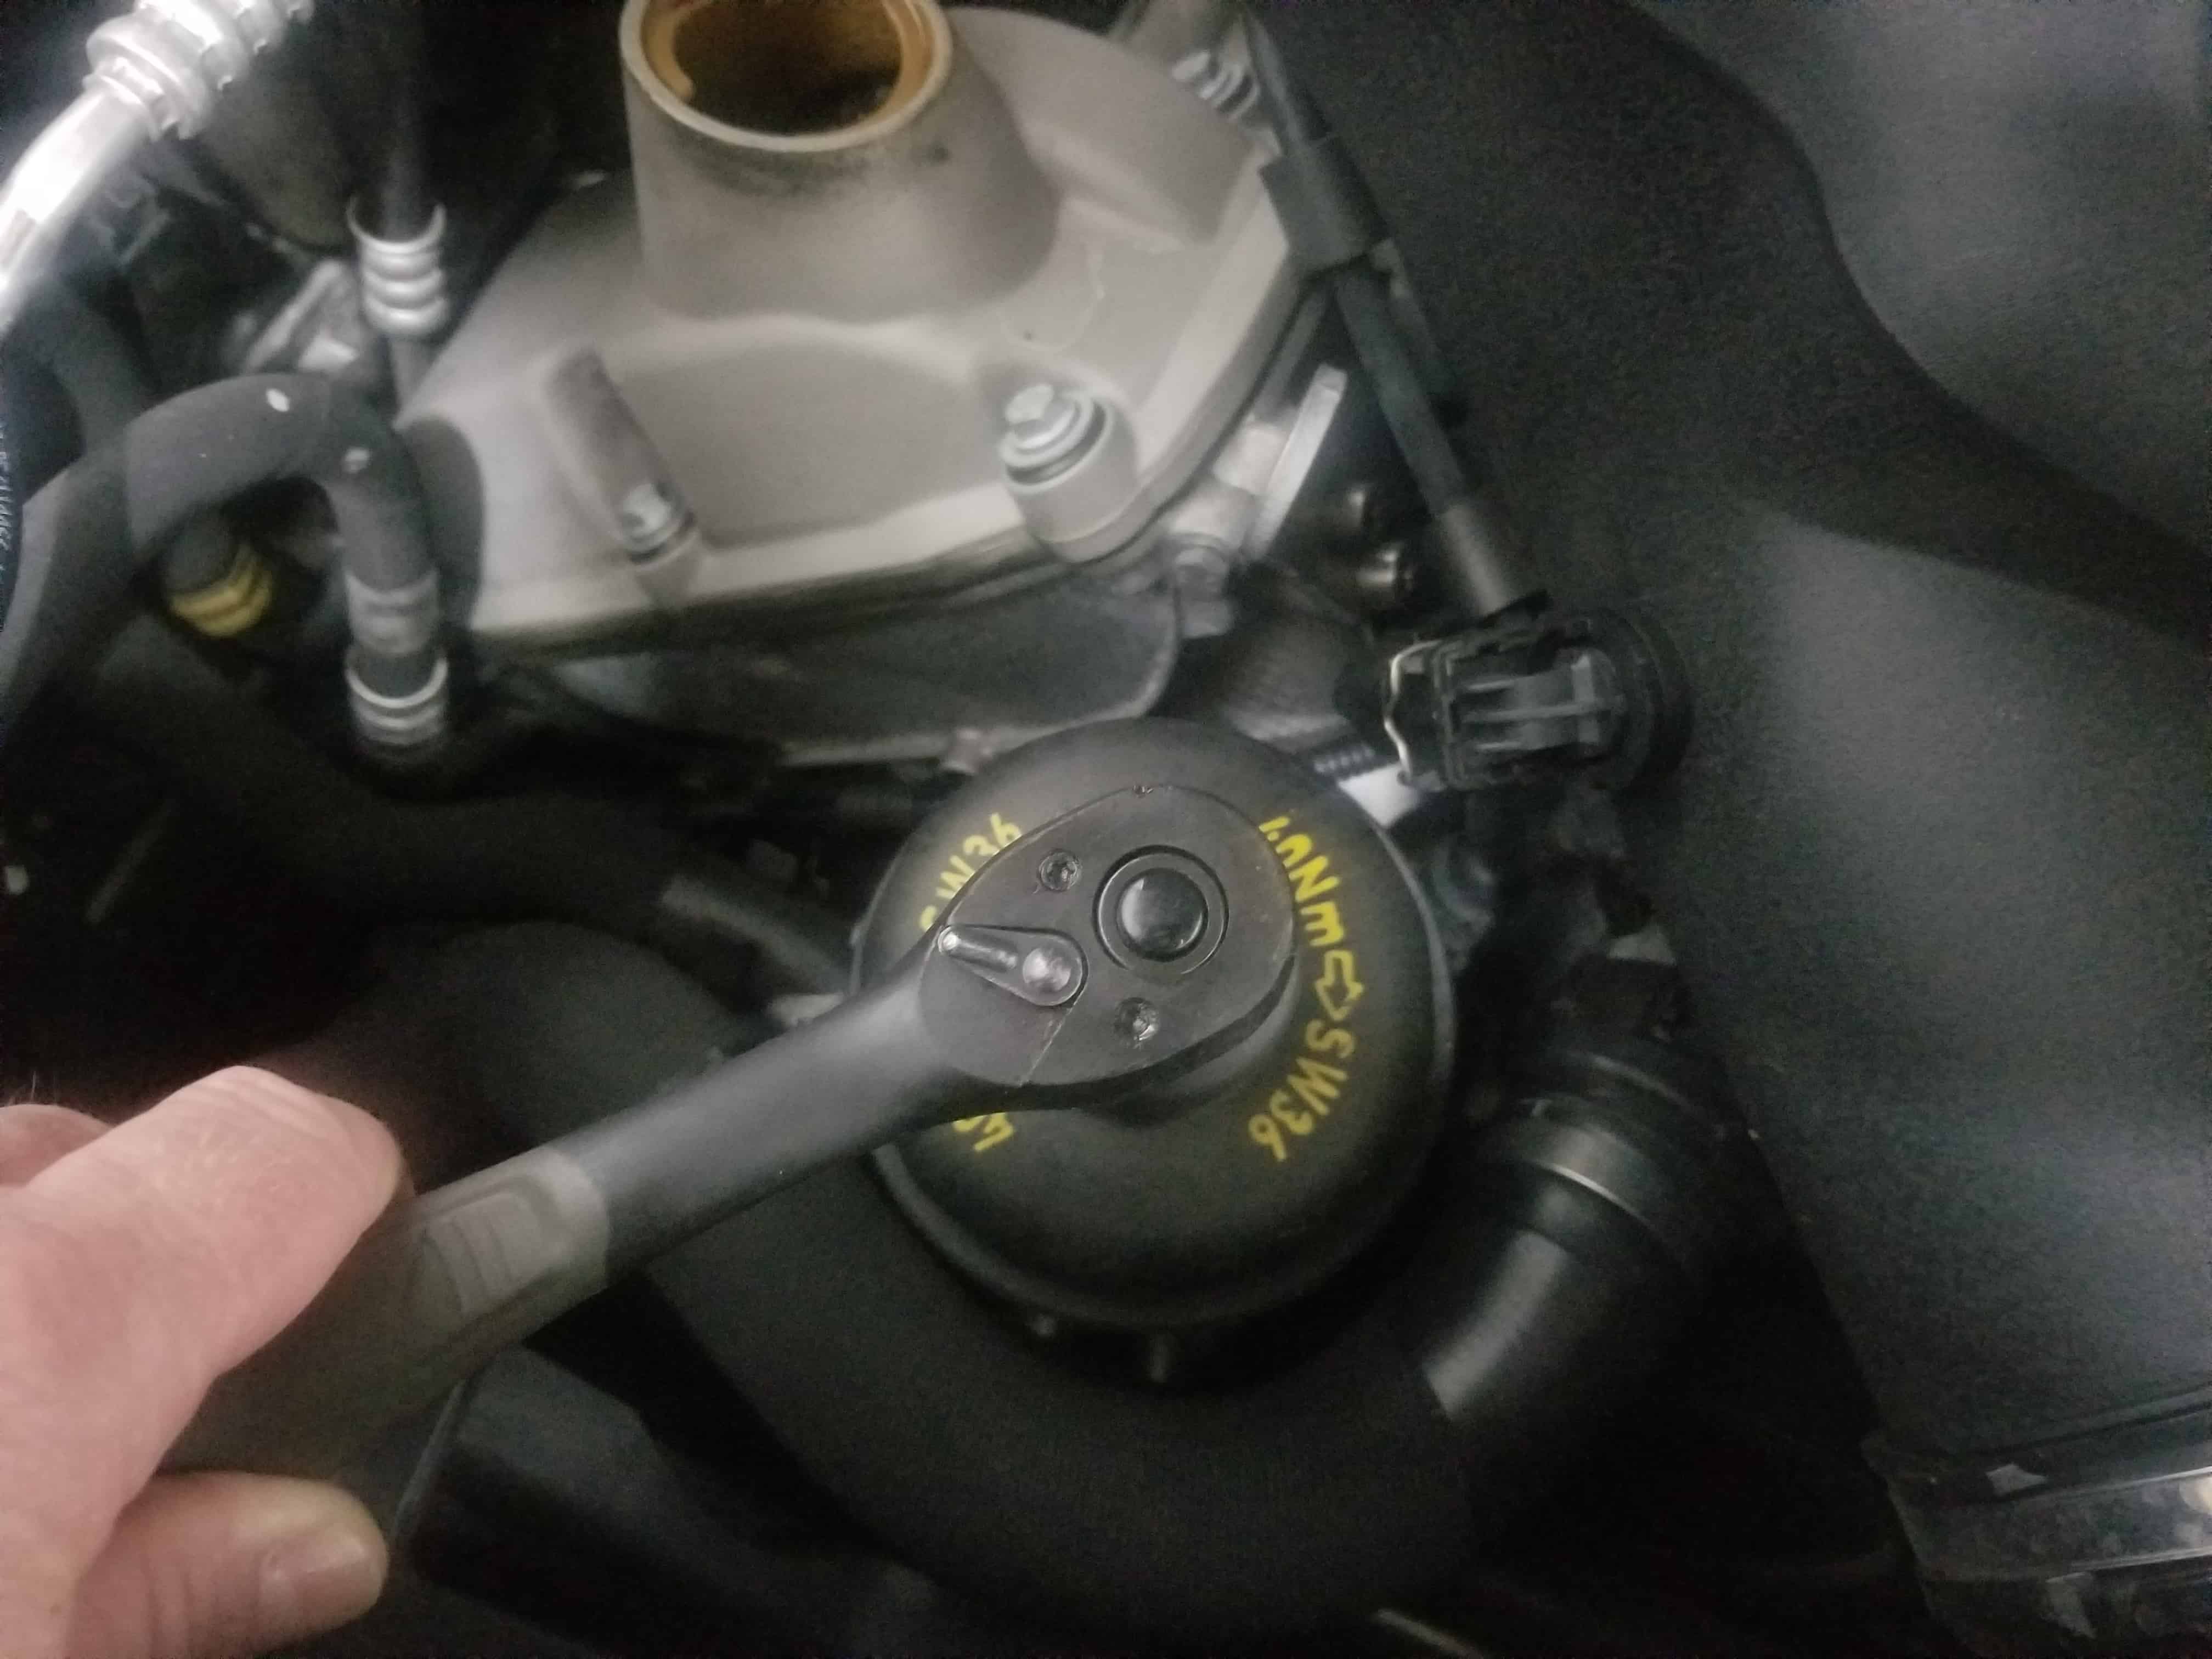 BMW E90 M3 oil change - loosen the oil filter cap